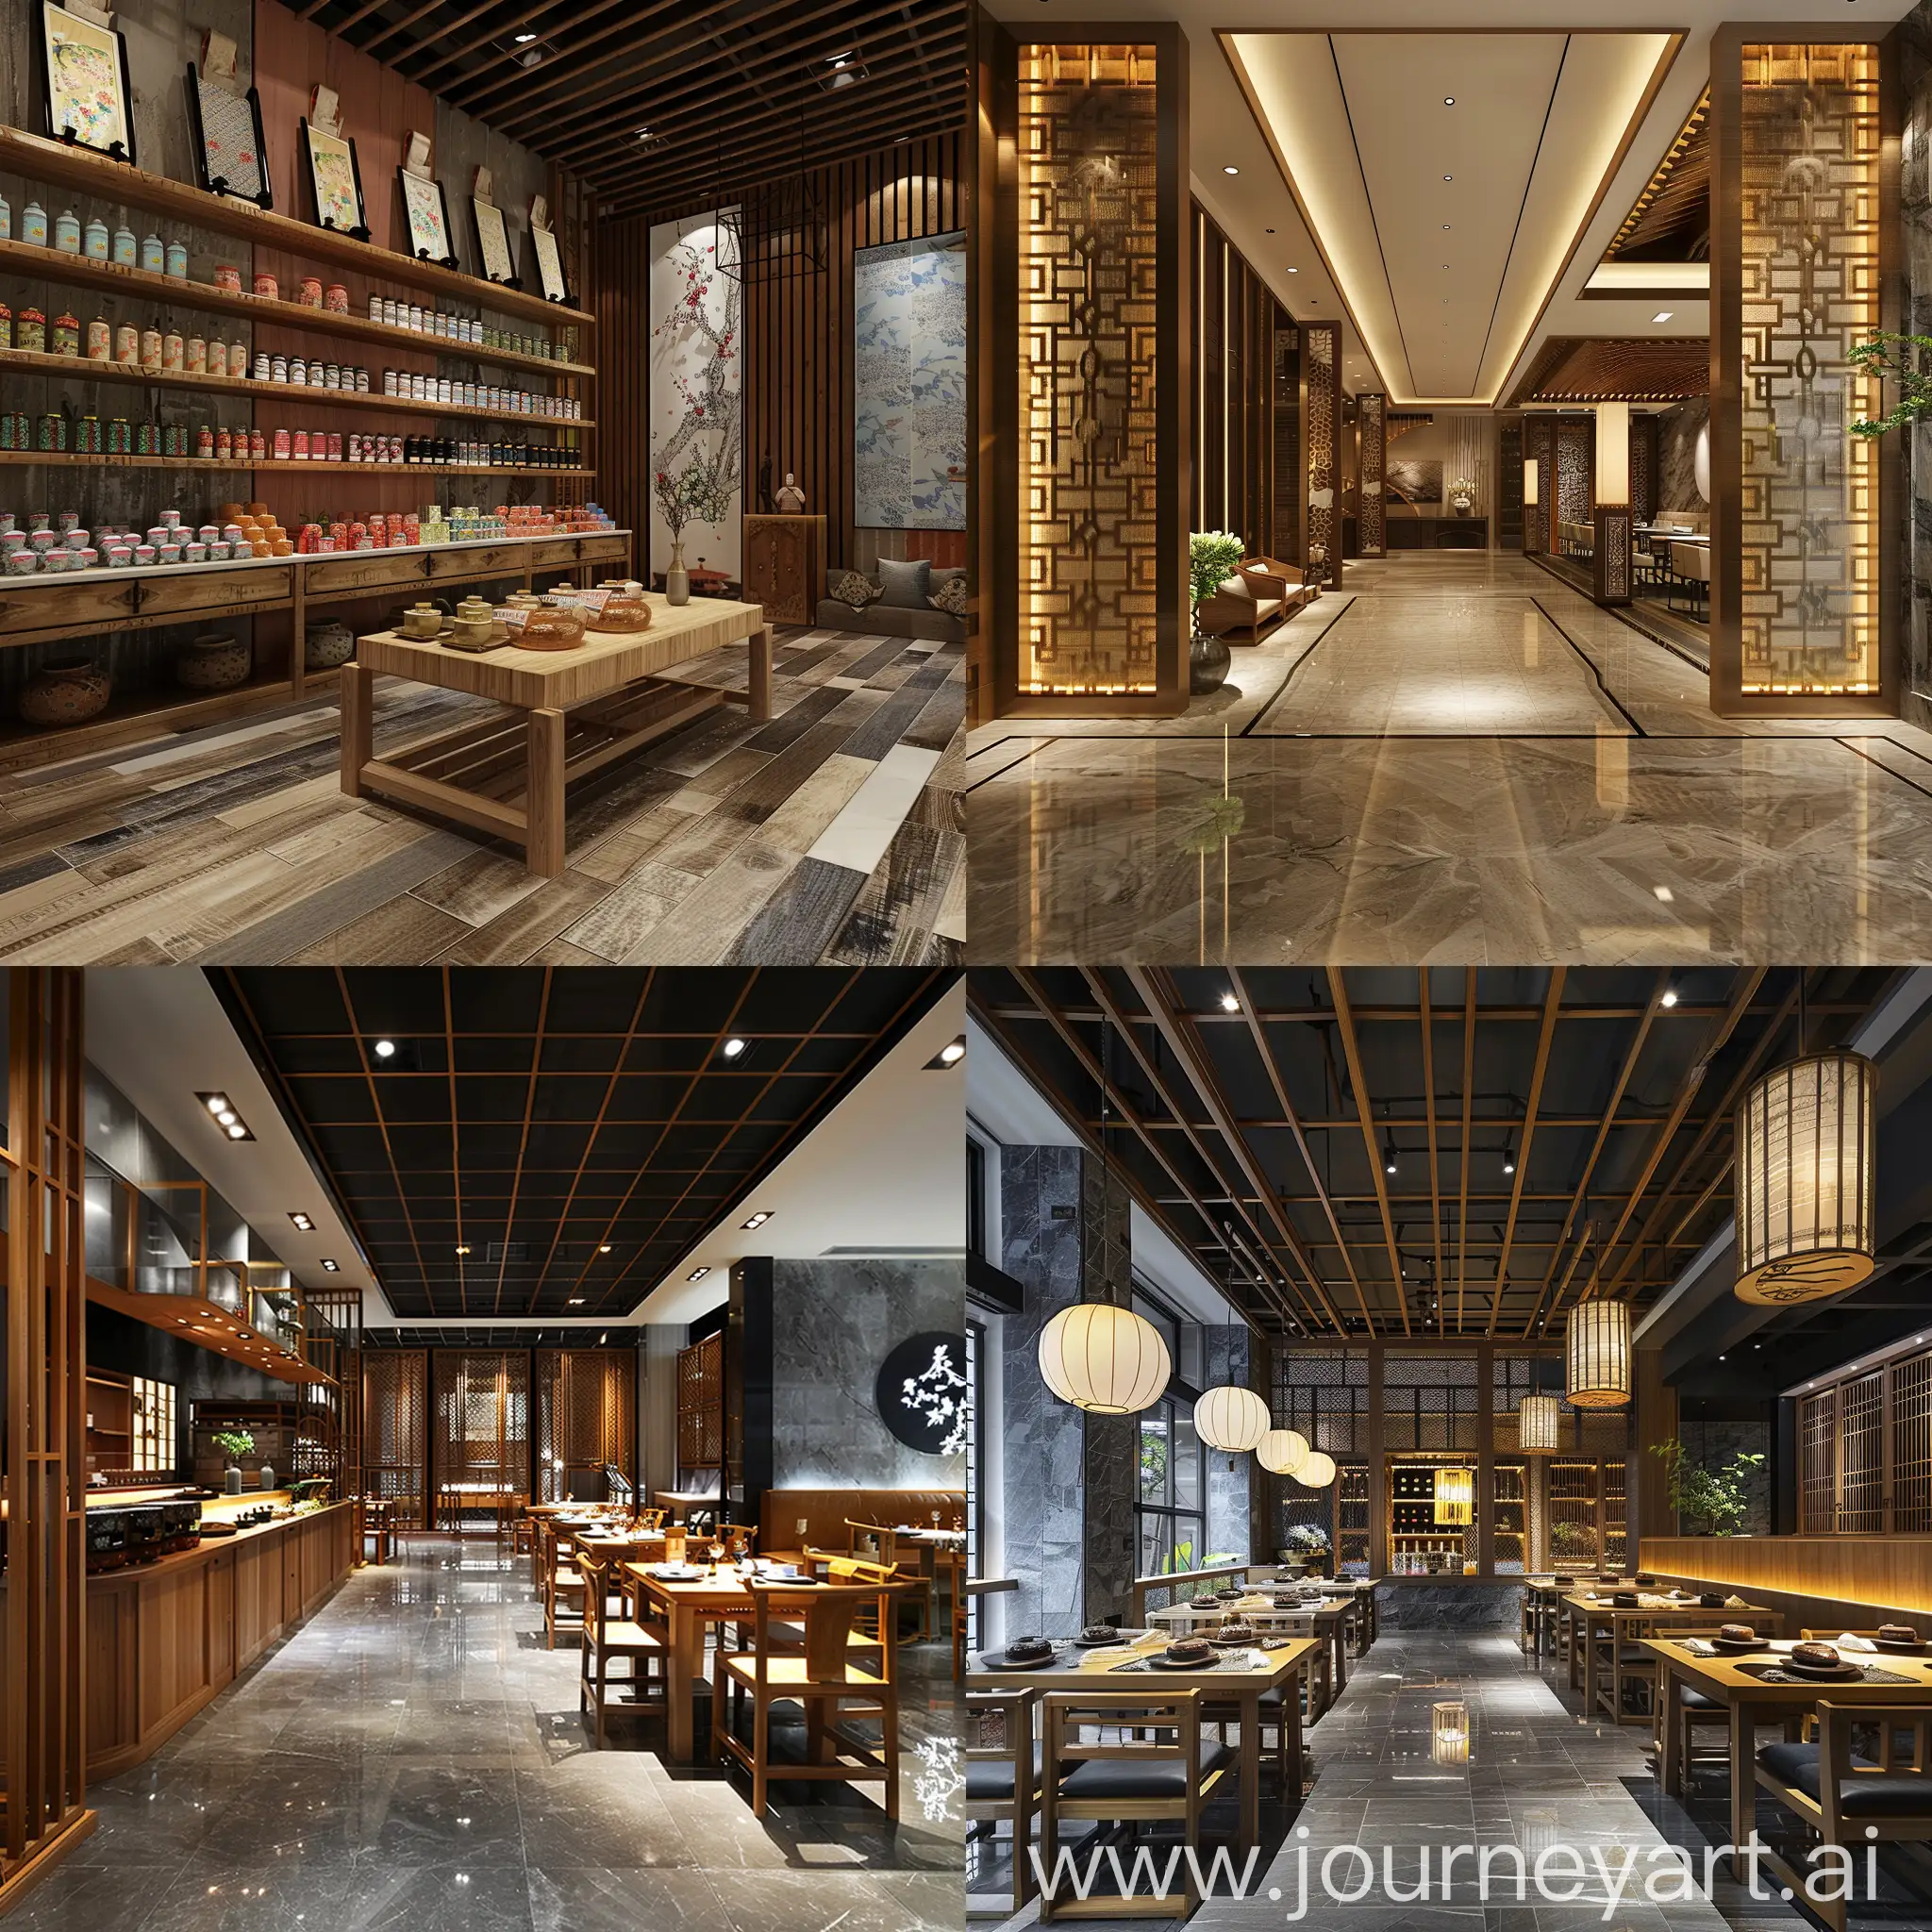 Modern-Shandong-Cuisine-Restaurant-Ingredients-and-Decorative-Materials